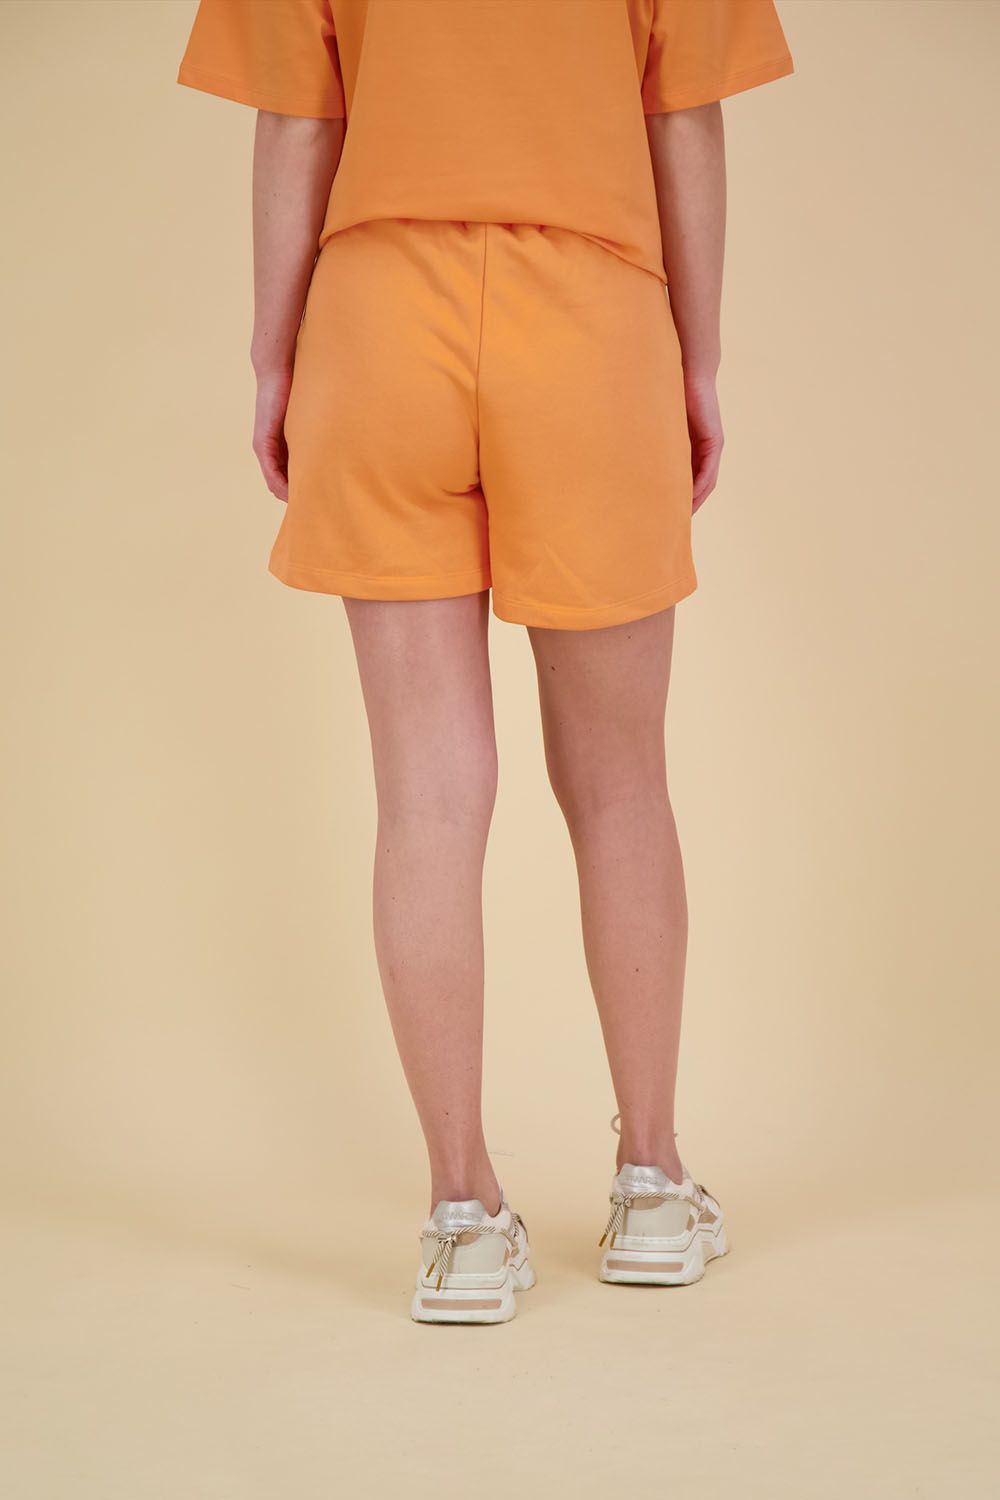 The Jogg Concept Short Saki Oranje